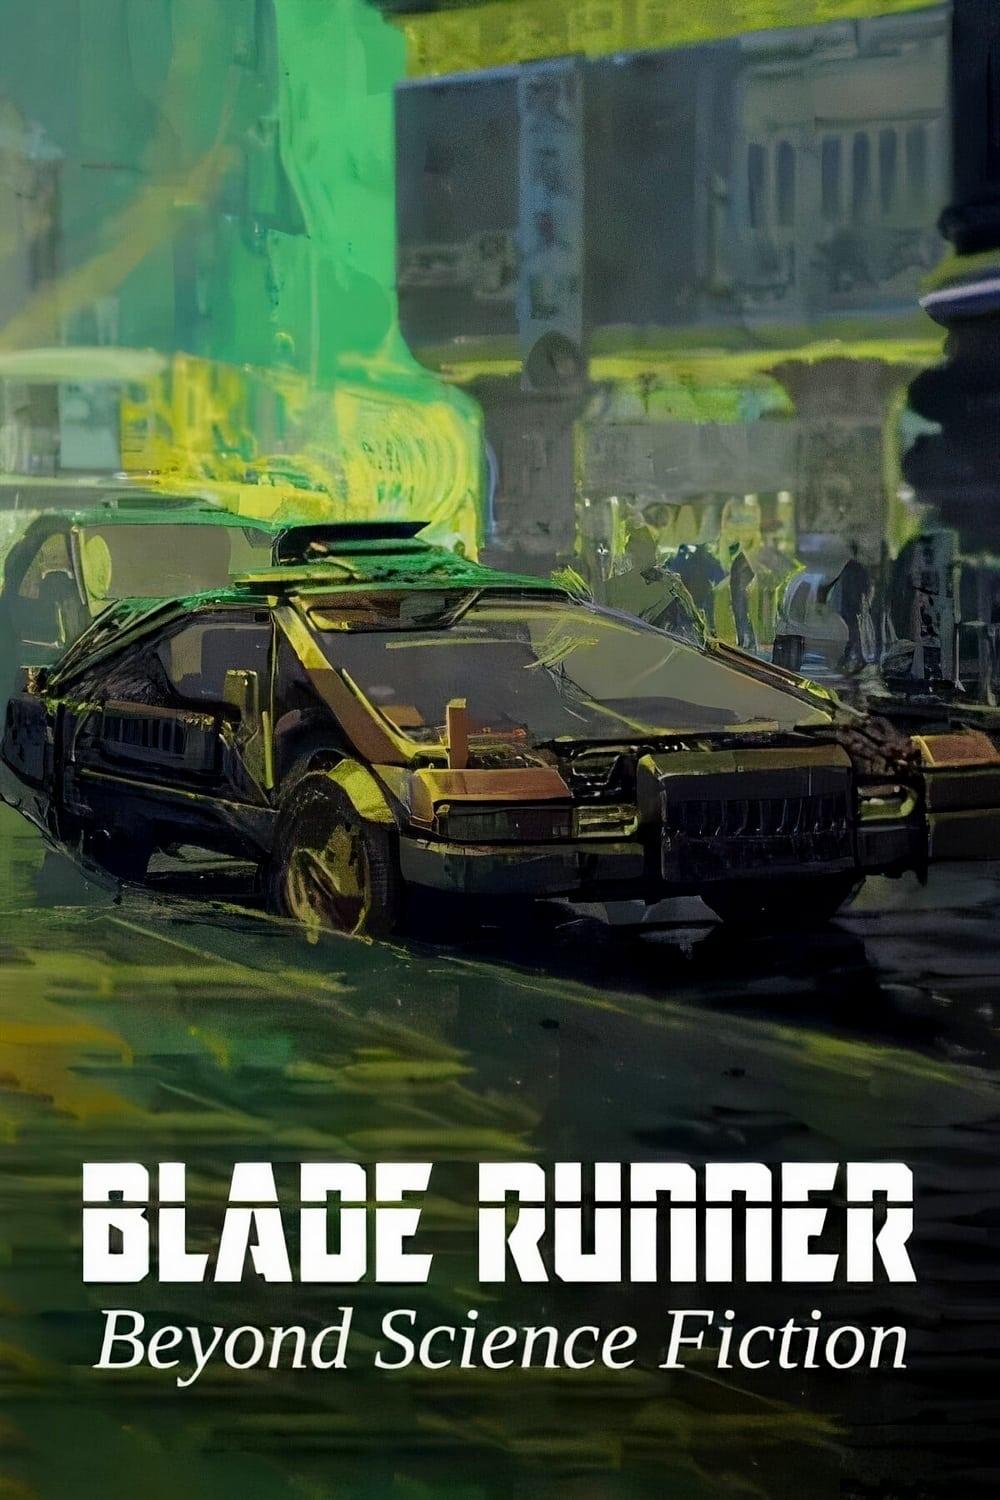 The Blade Runner Phenomenon poster